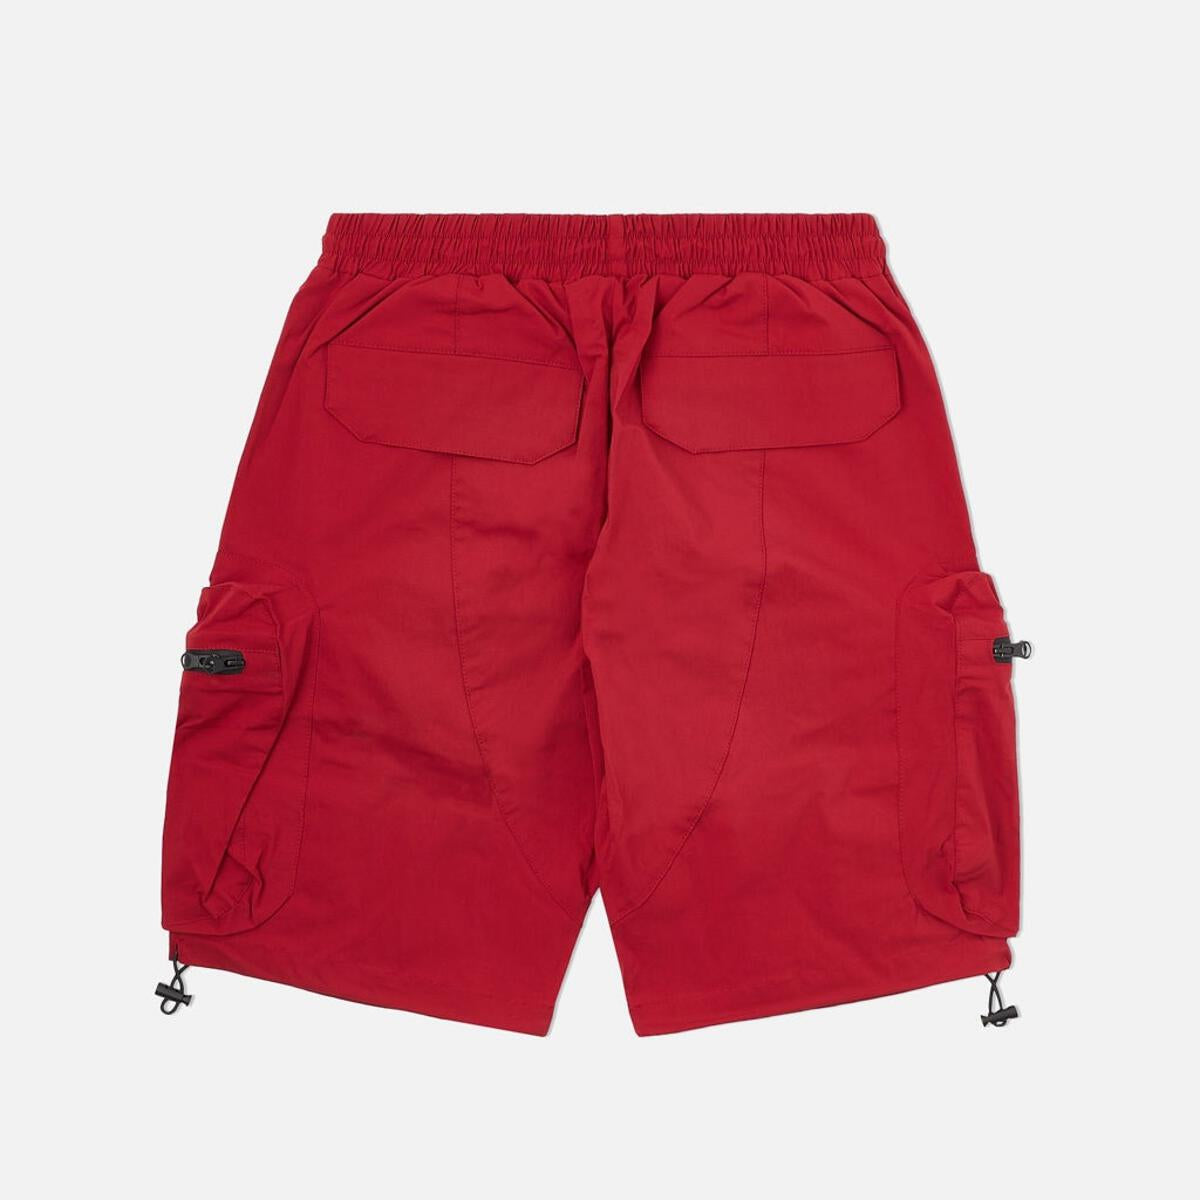 8&9 Red/Black Combat Nylon Shorts (SHCOMPREDB)